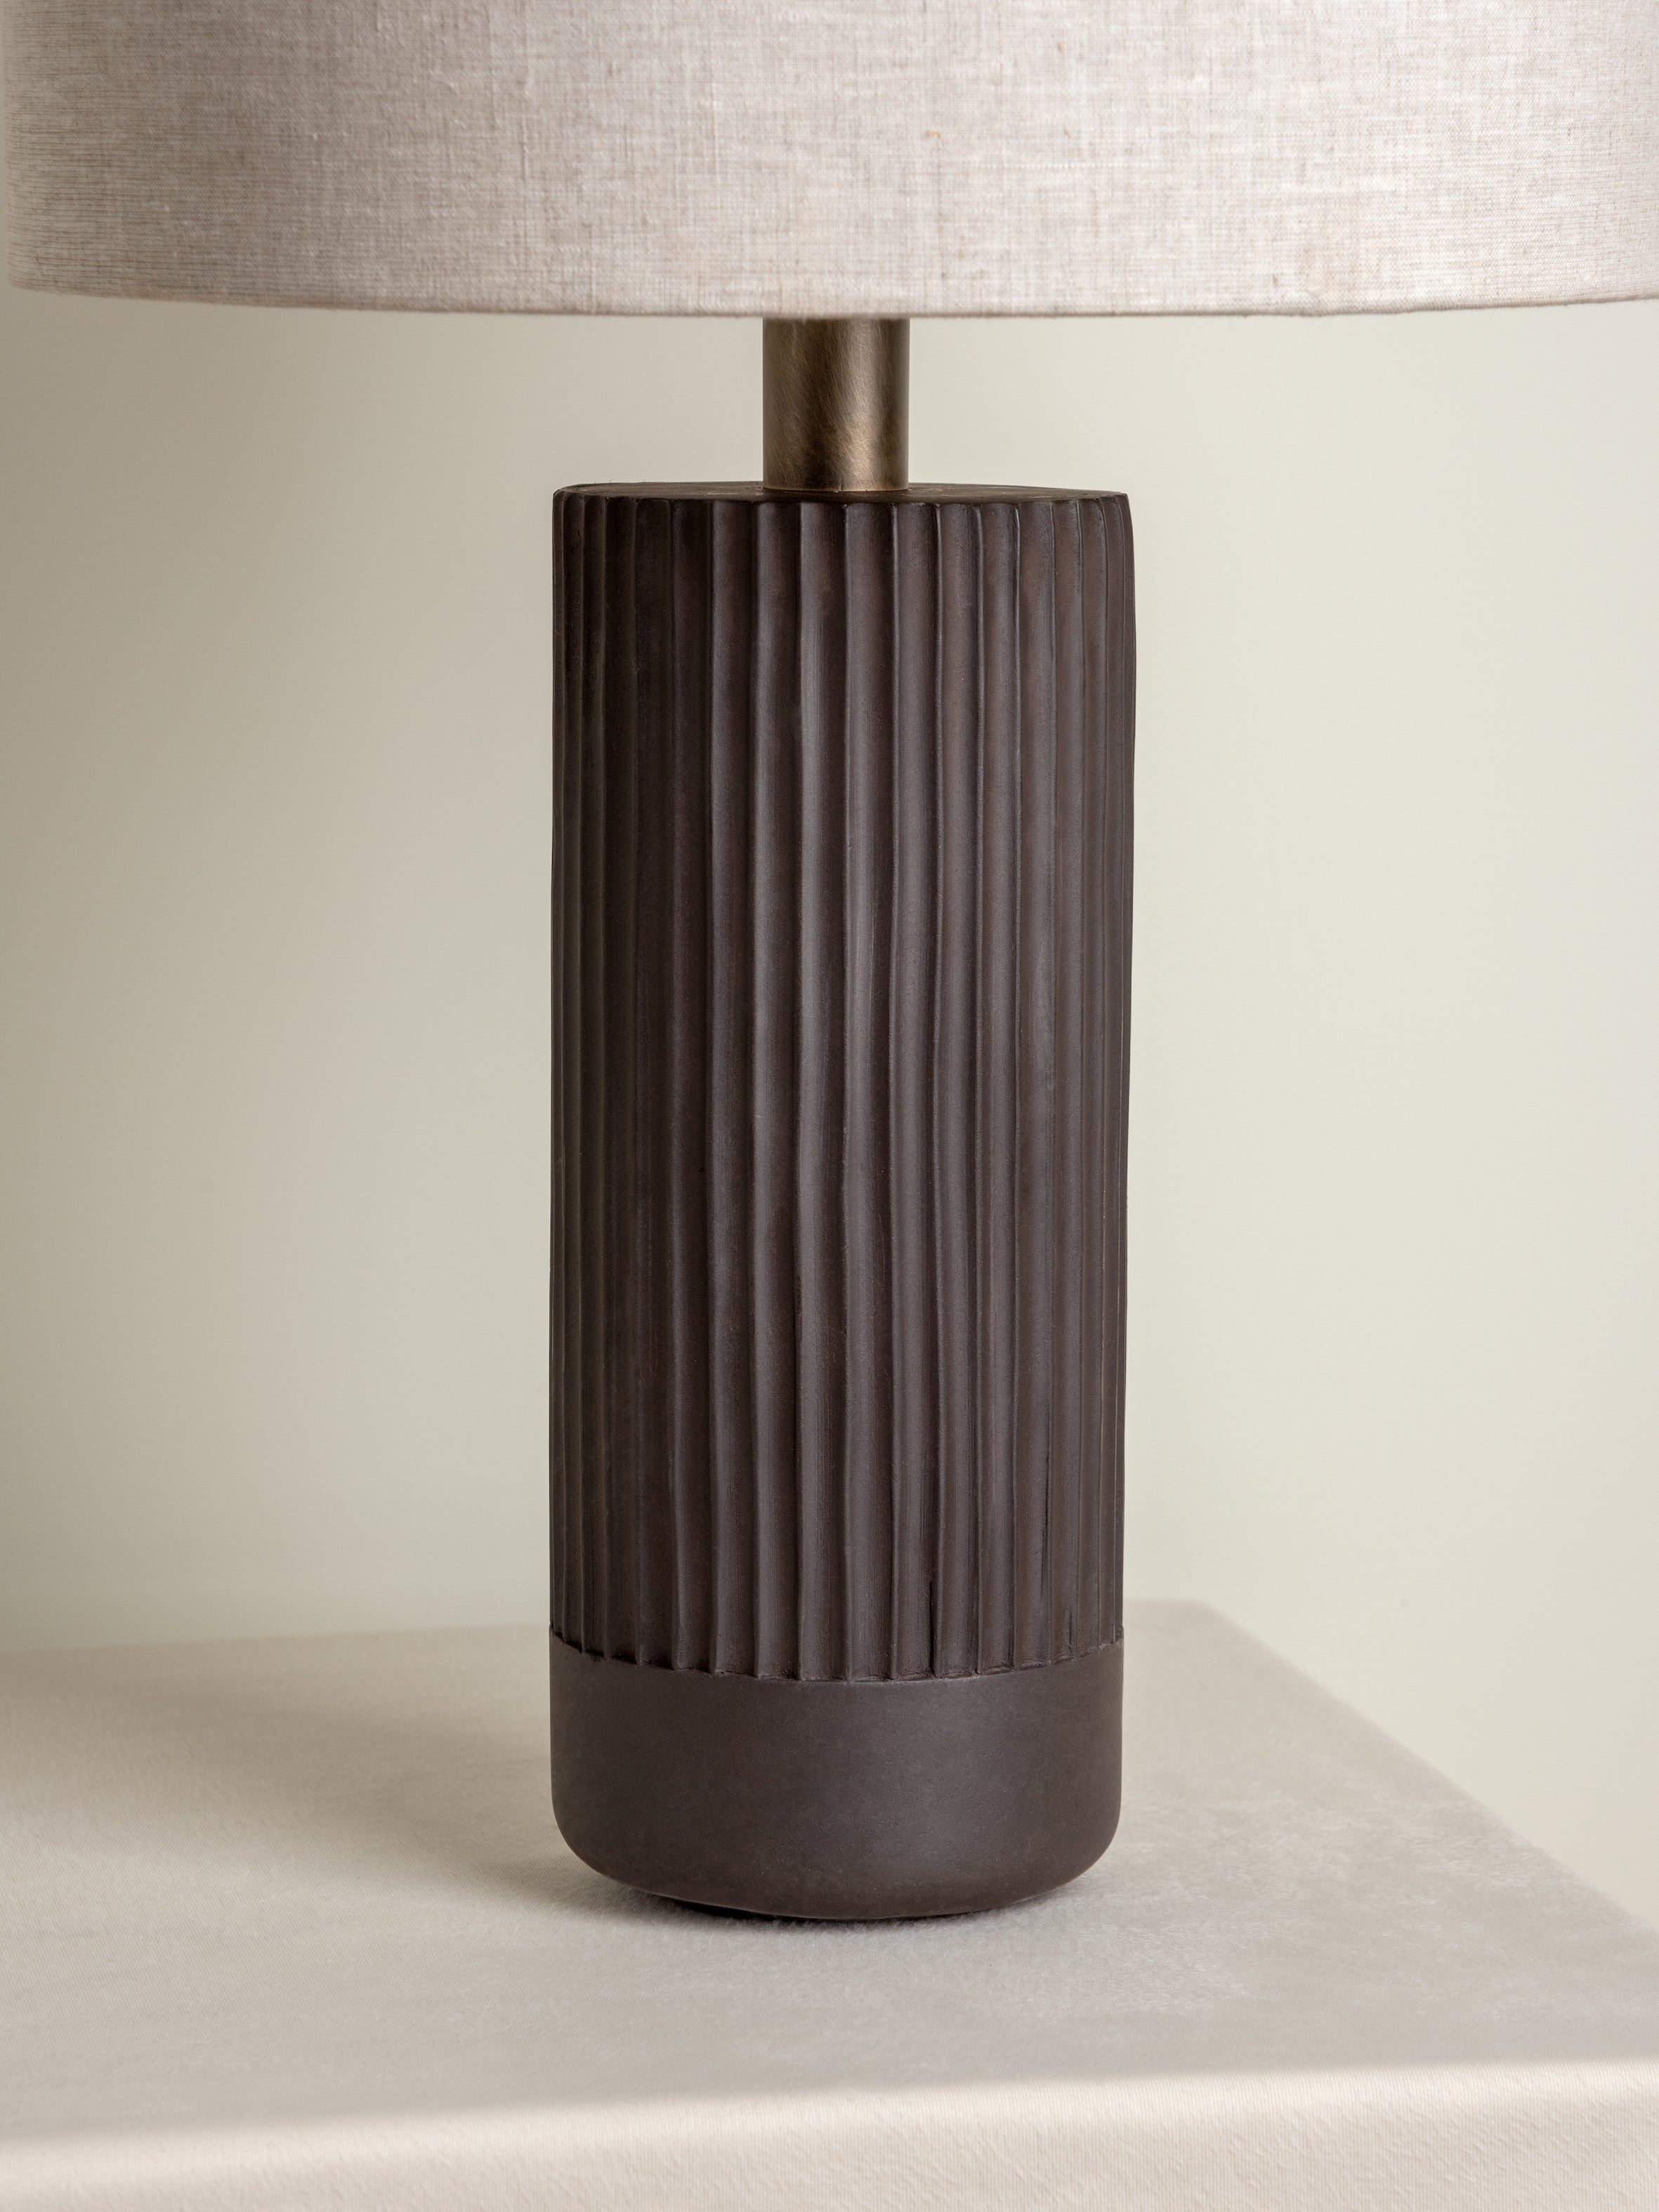 Nitara - chocolate ribbed concrete table lamp | Table Lamp | Lights & Lamps Inc | USA